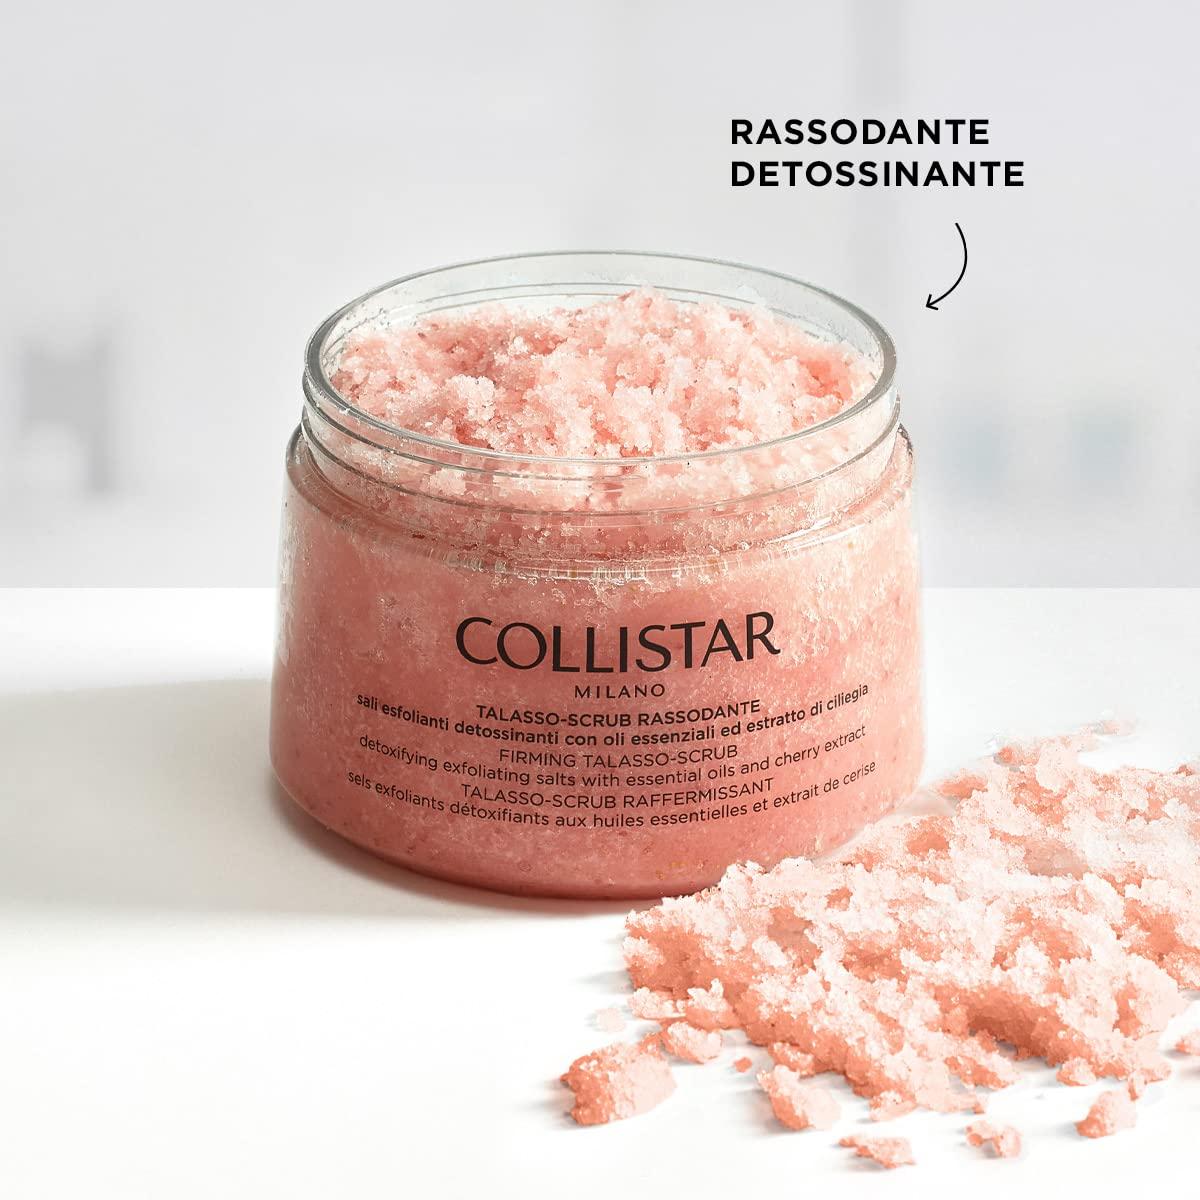 Collistar Firming Talasso Scrub Detoxifying Exfoliating Salts 700g